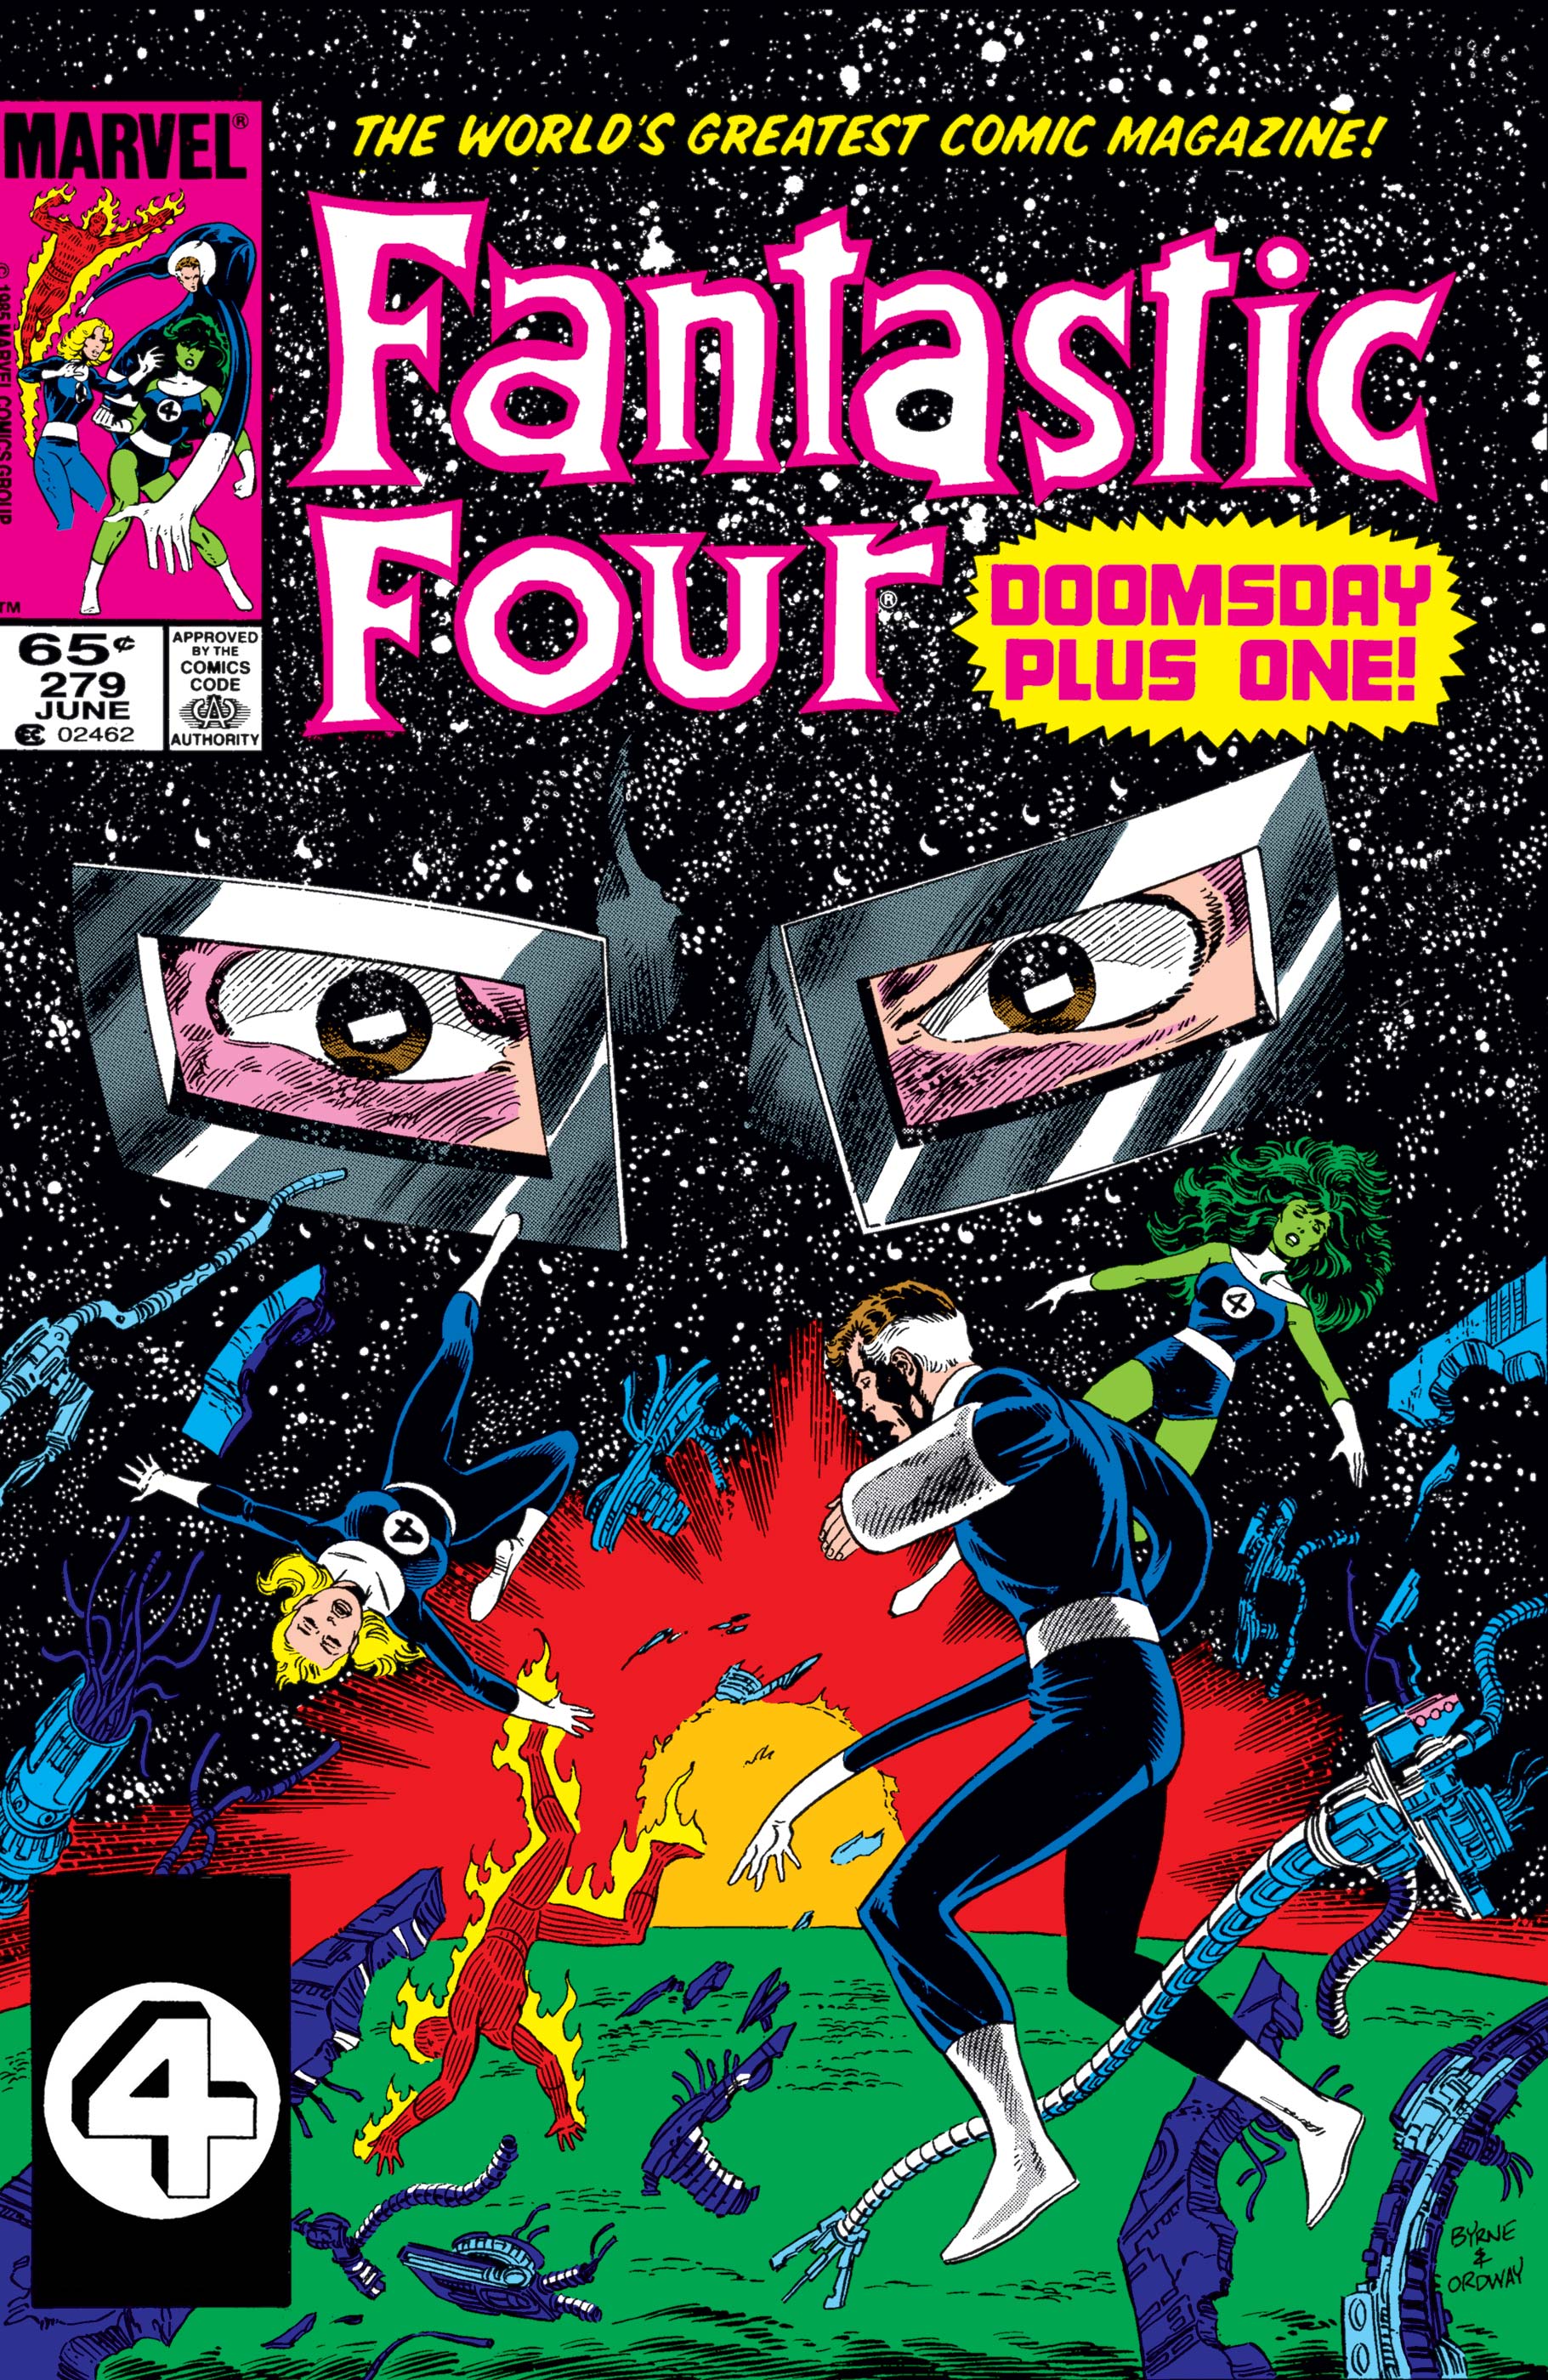 Fantastic Four (1961) #279